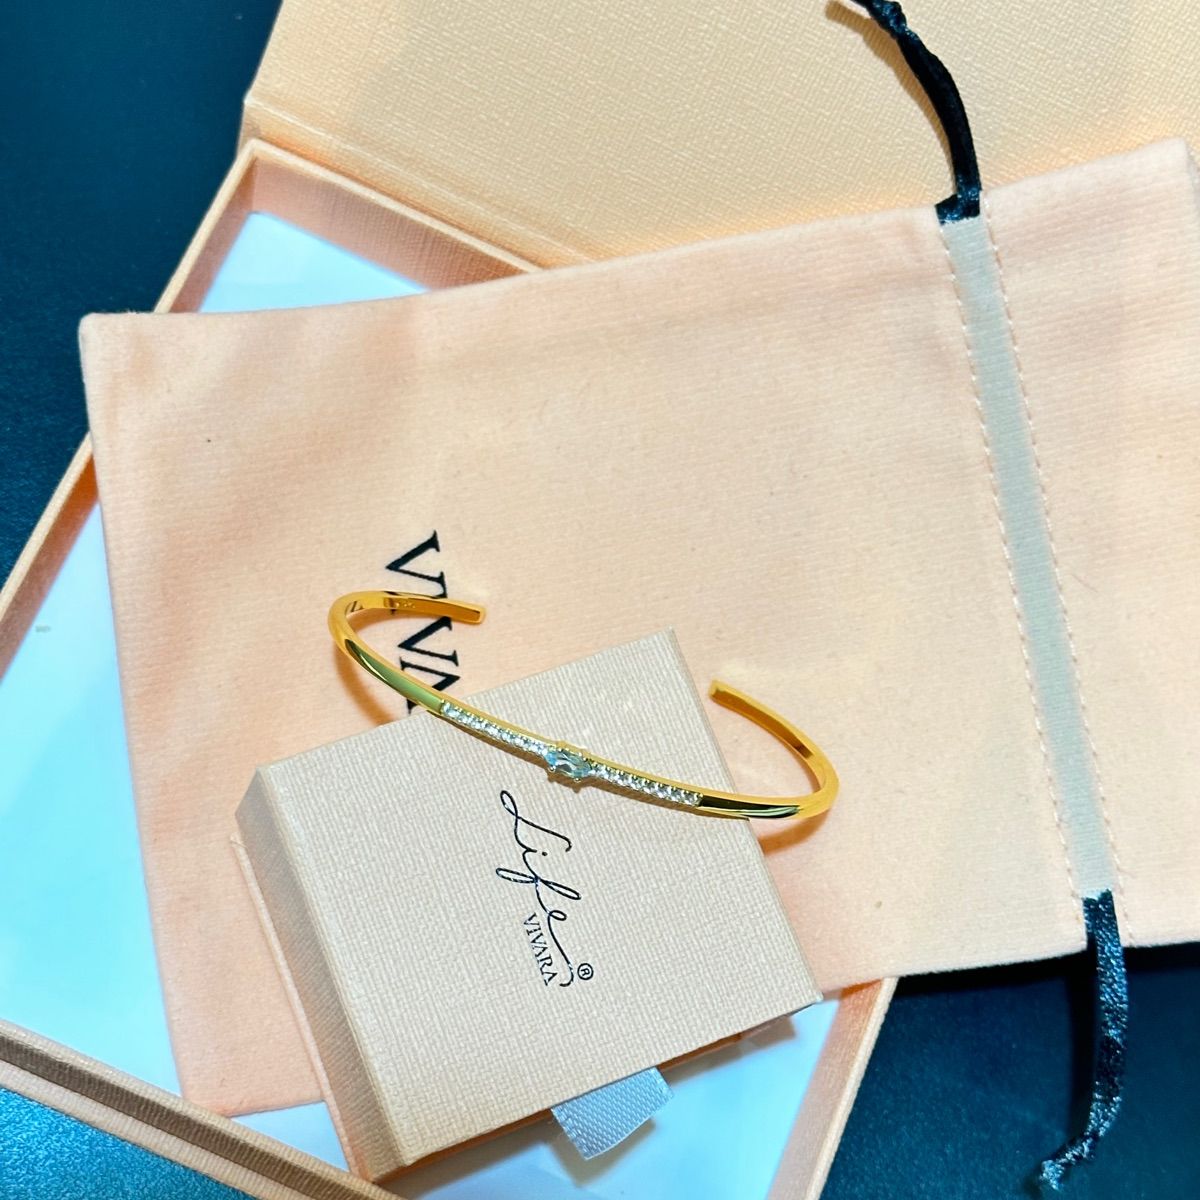 Anel Louis Vuitton Original Cadeado Prata e Dourado Feminino